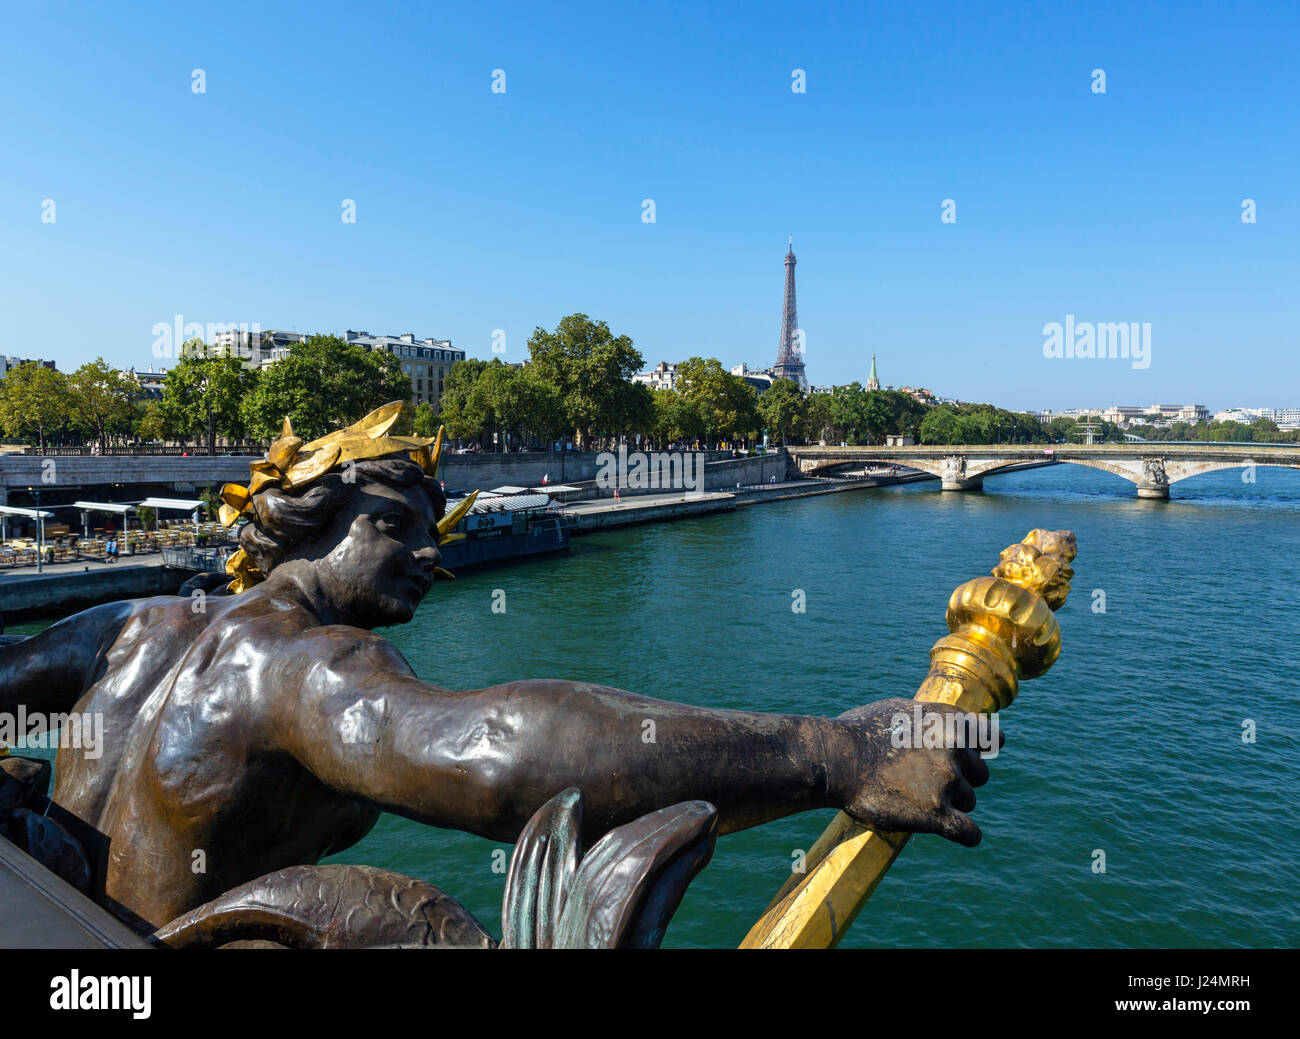 The River Seine and Eiffel Tower (Tour Eiffel) from Alexander III Bridge (Pont Alexandre III), Paris, France Stock Photo